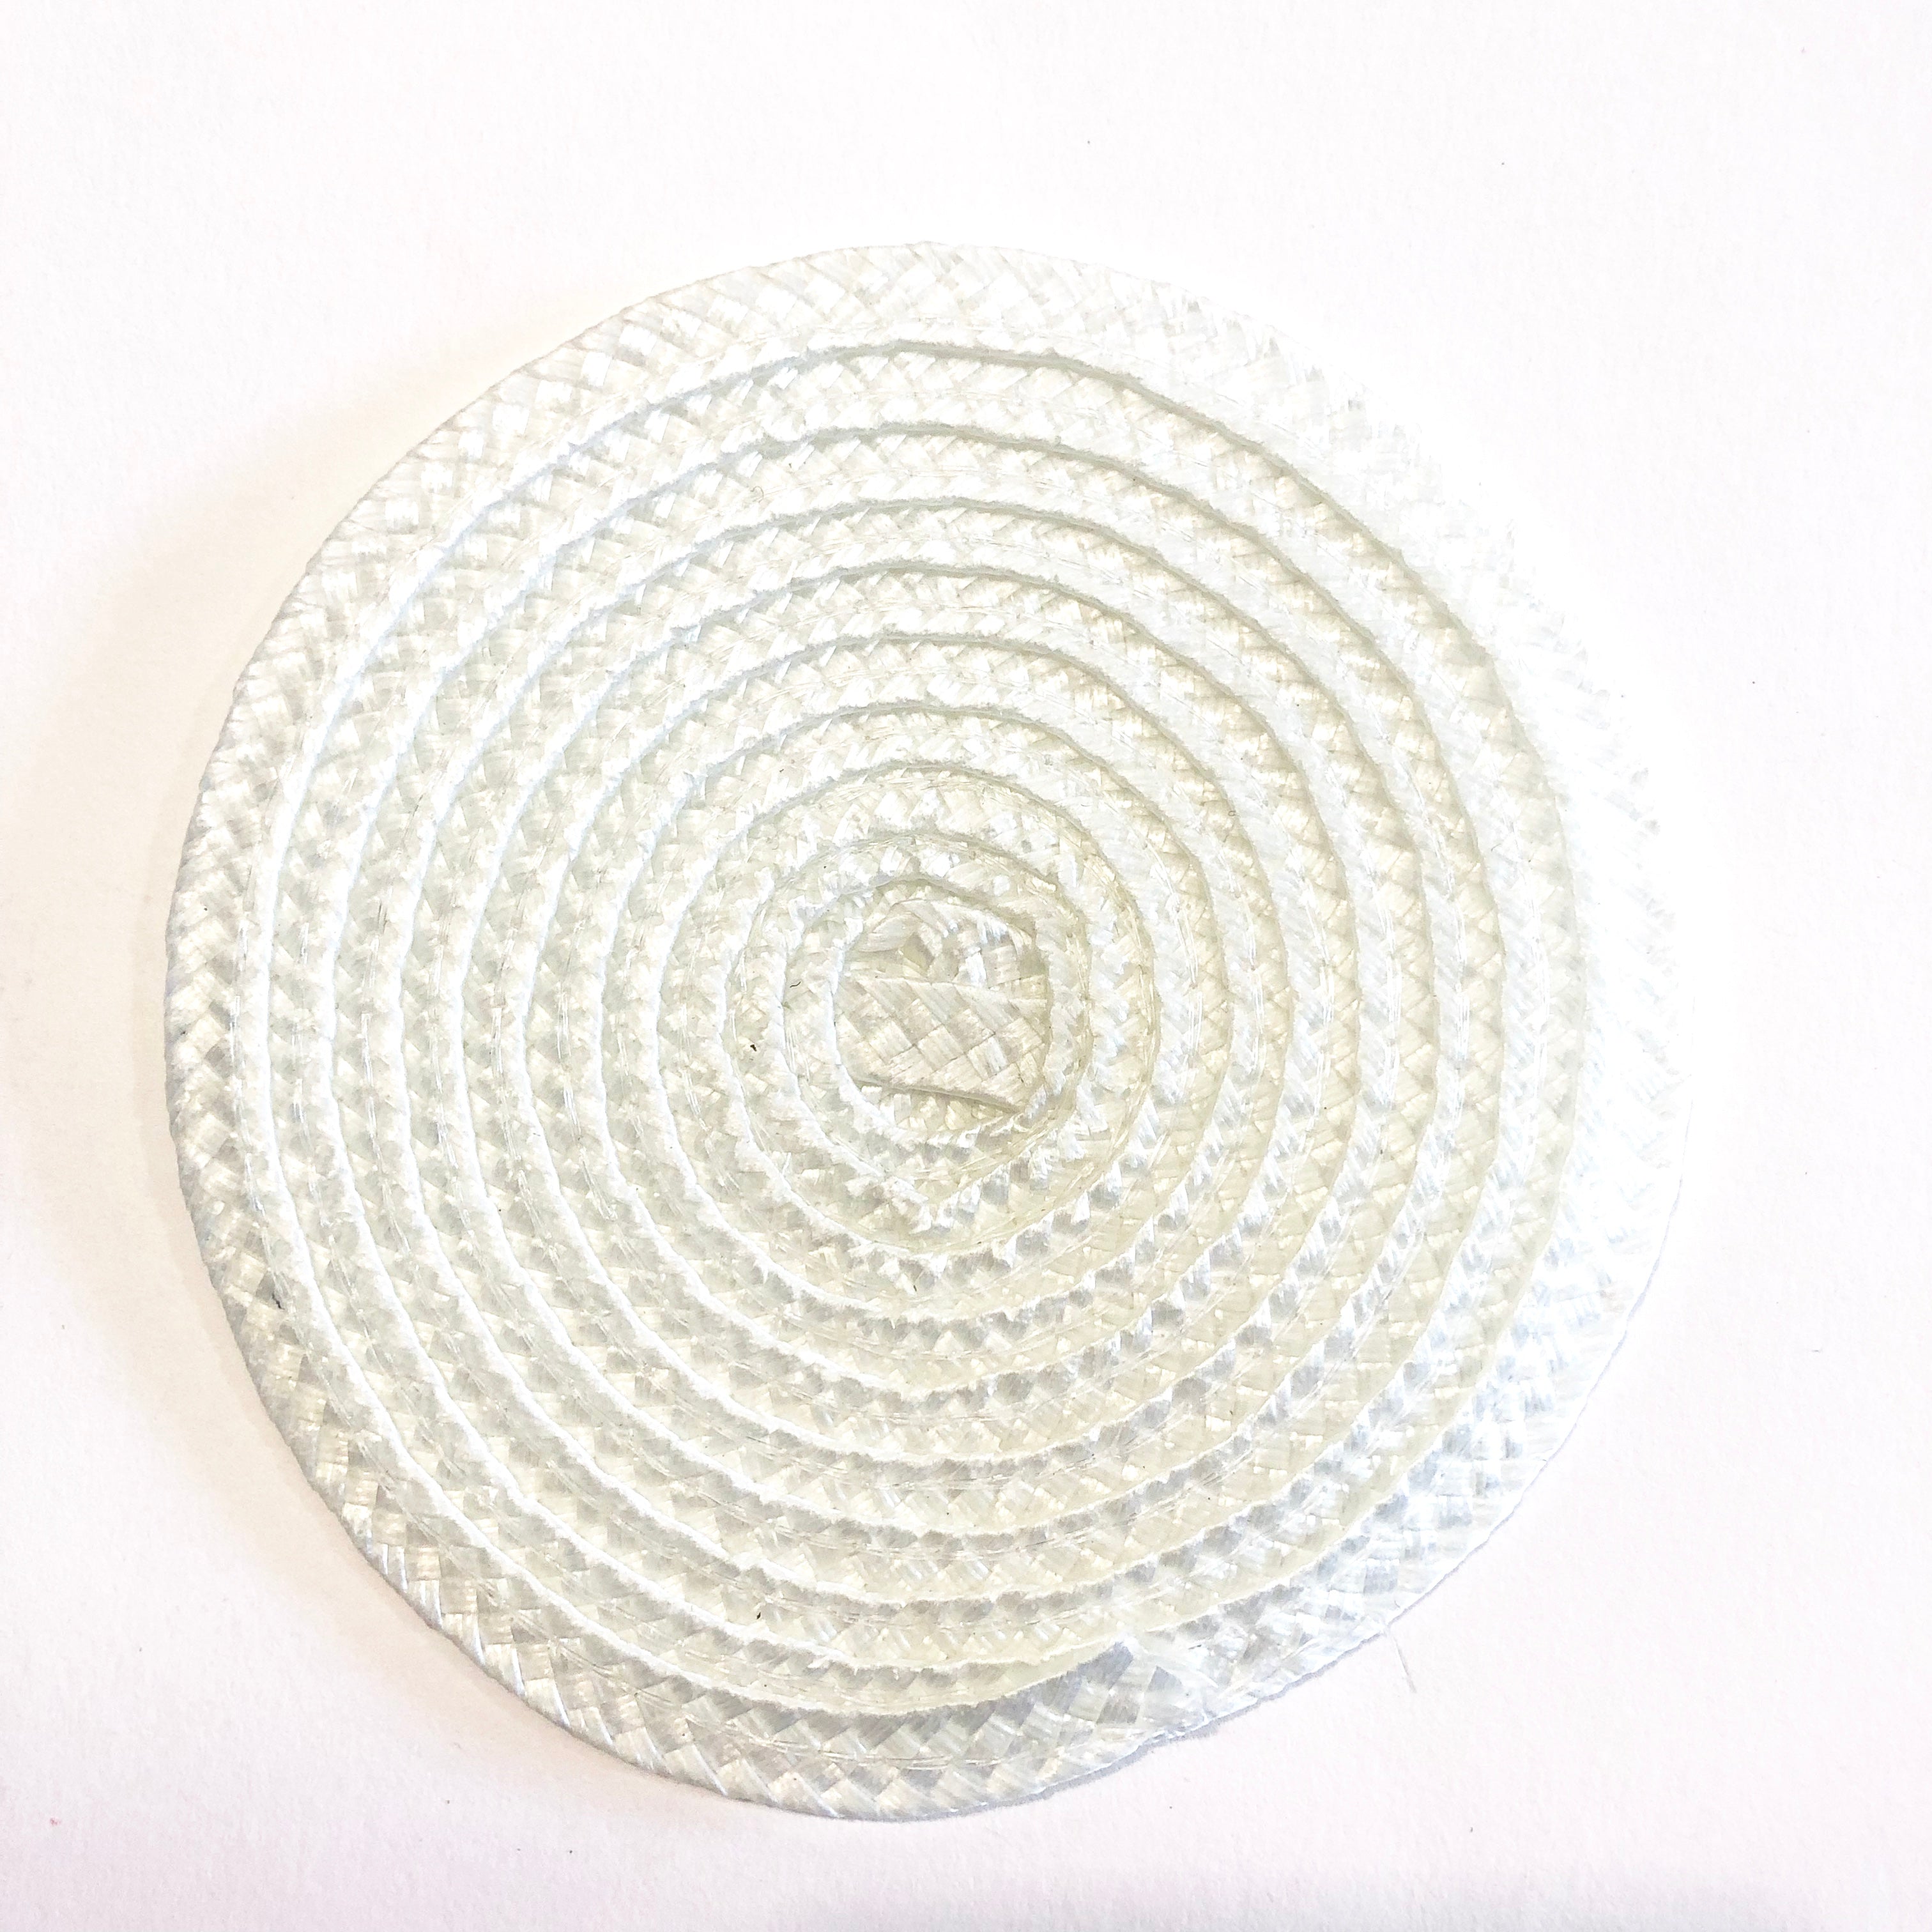 Polybraid 100mm Round Disc Millinery Fascinator Base x 10 pcs - White